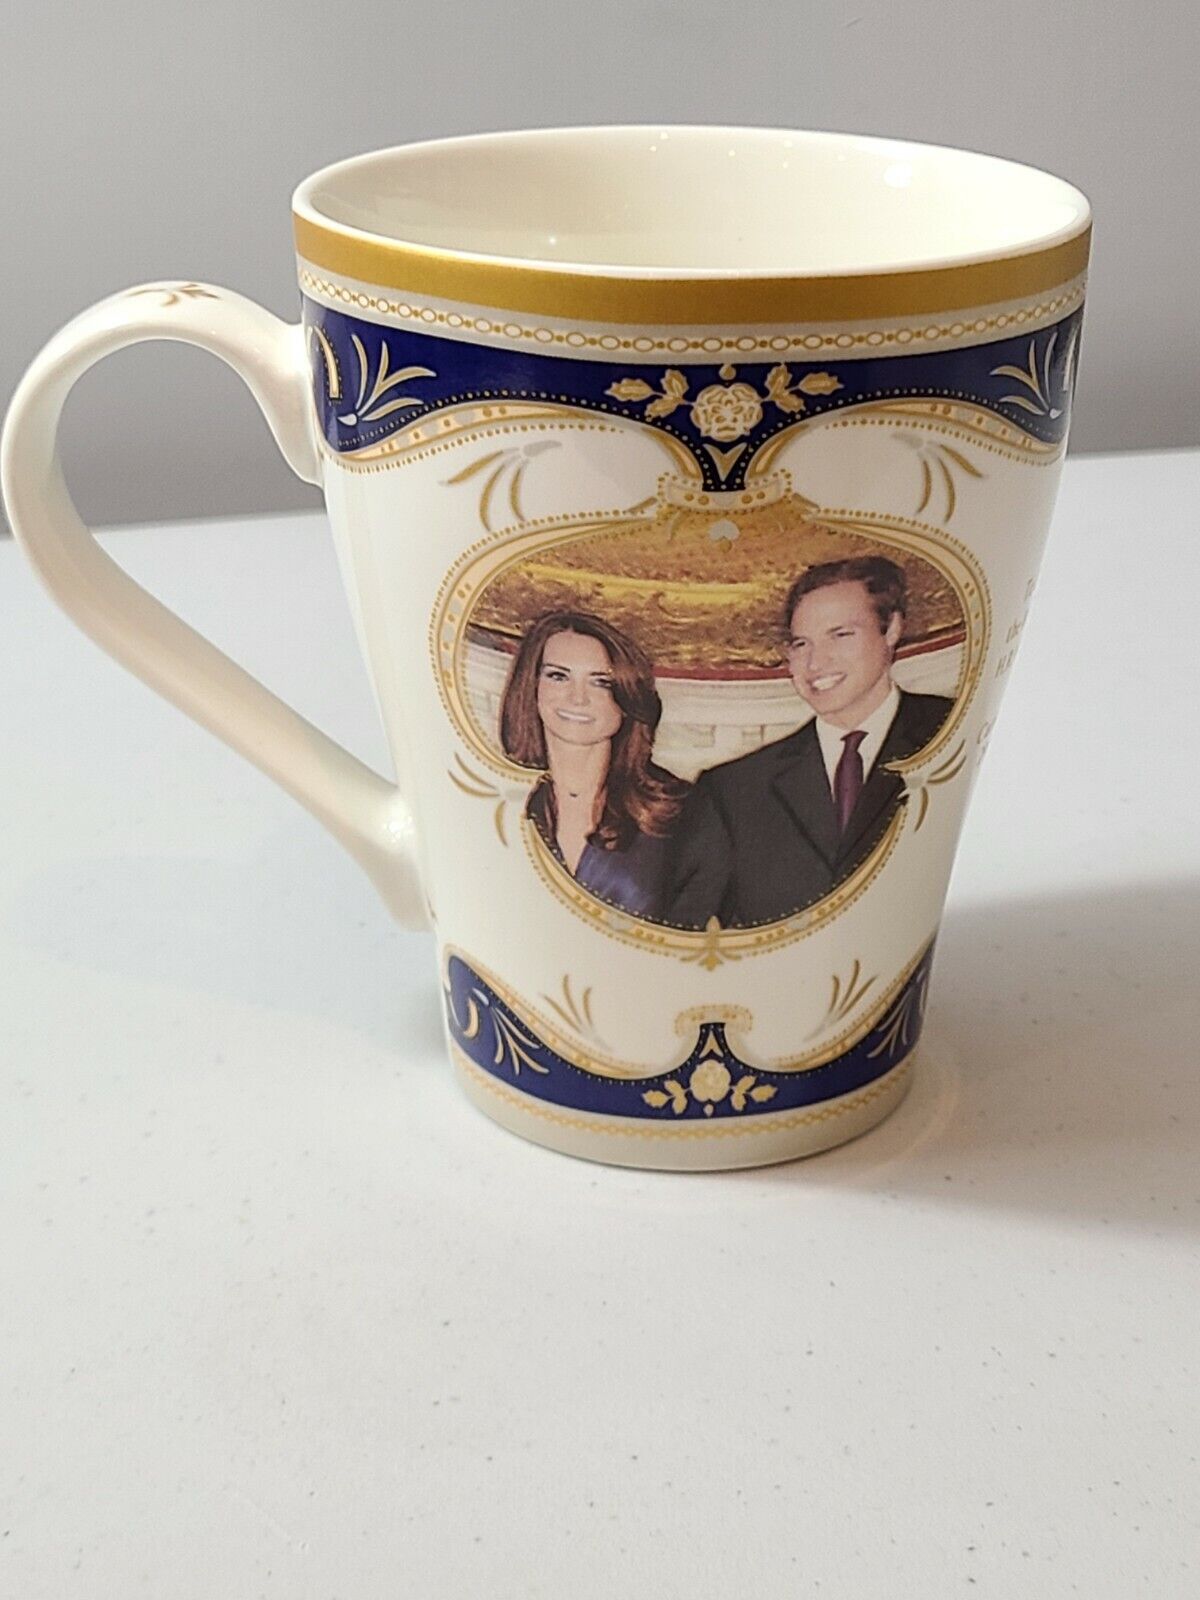 Royal Crest - H.R.H Prince William & Catherine Middleton-Royal Wedding Mug 2011